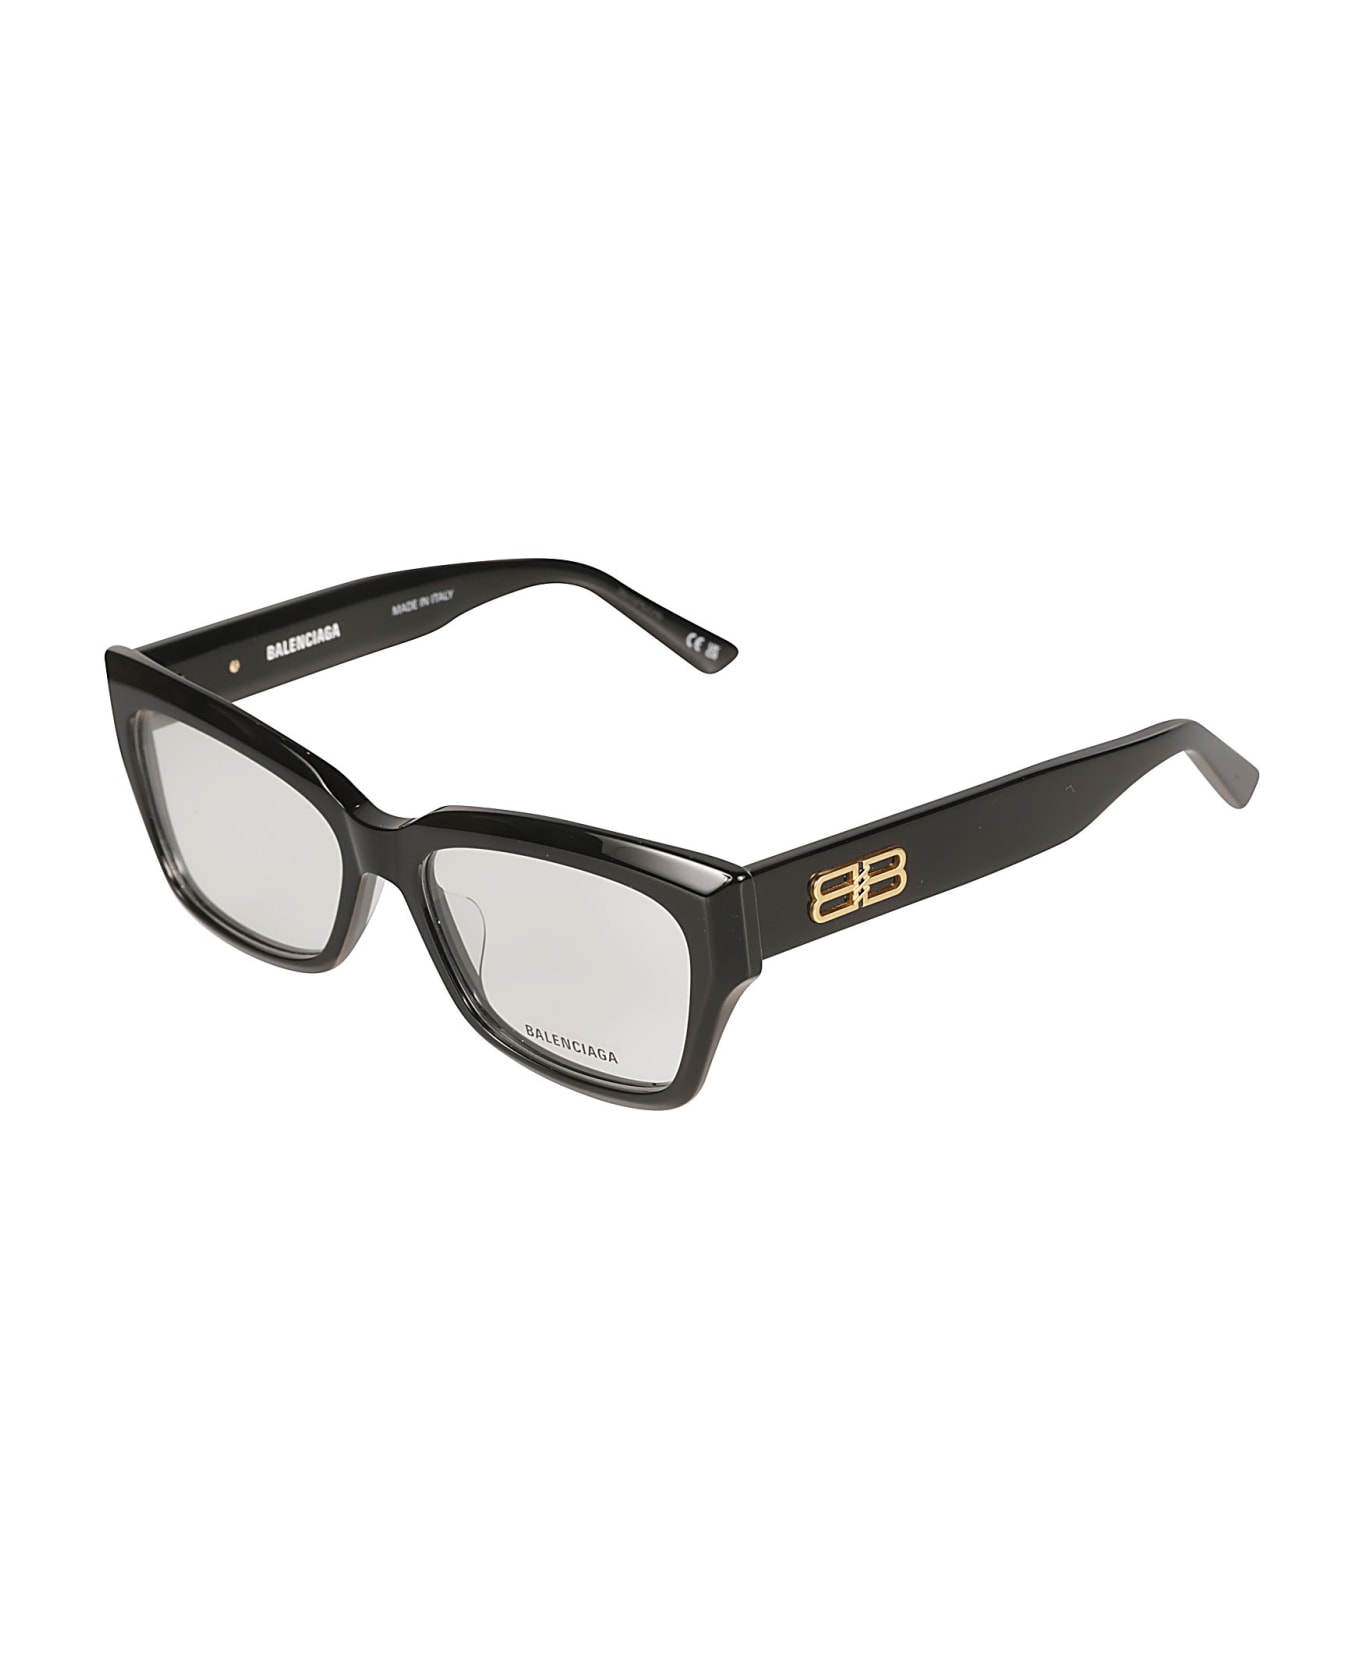 Balenciaga Eyewear Bb Plaque Square Frame Glasses - Black/Transparent